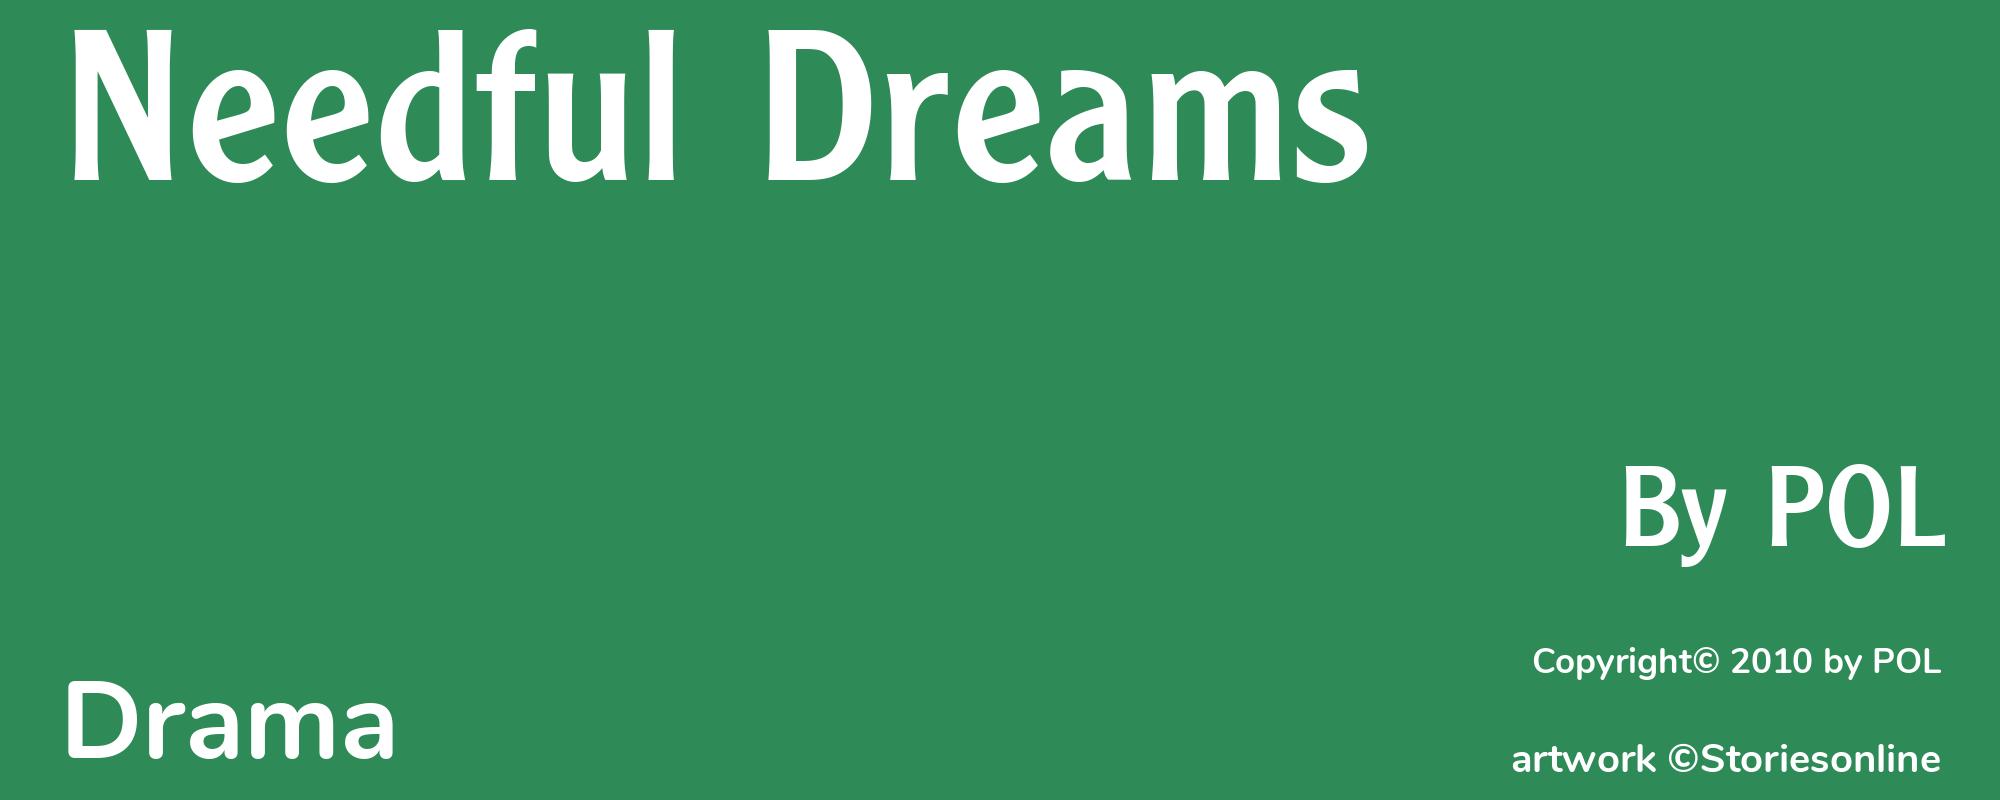 Needful Dreams - Cover